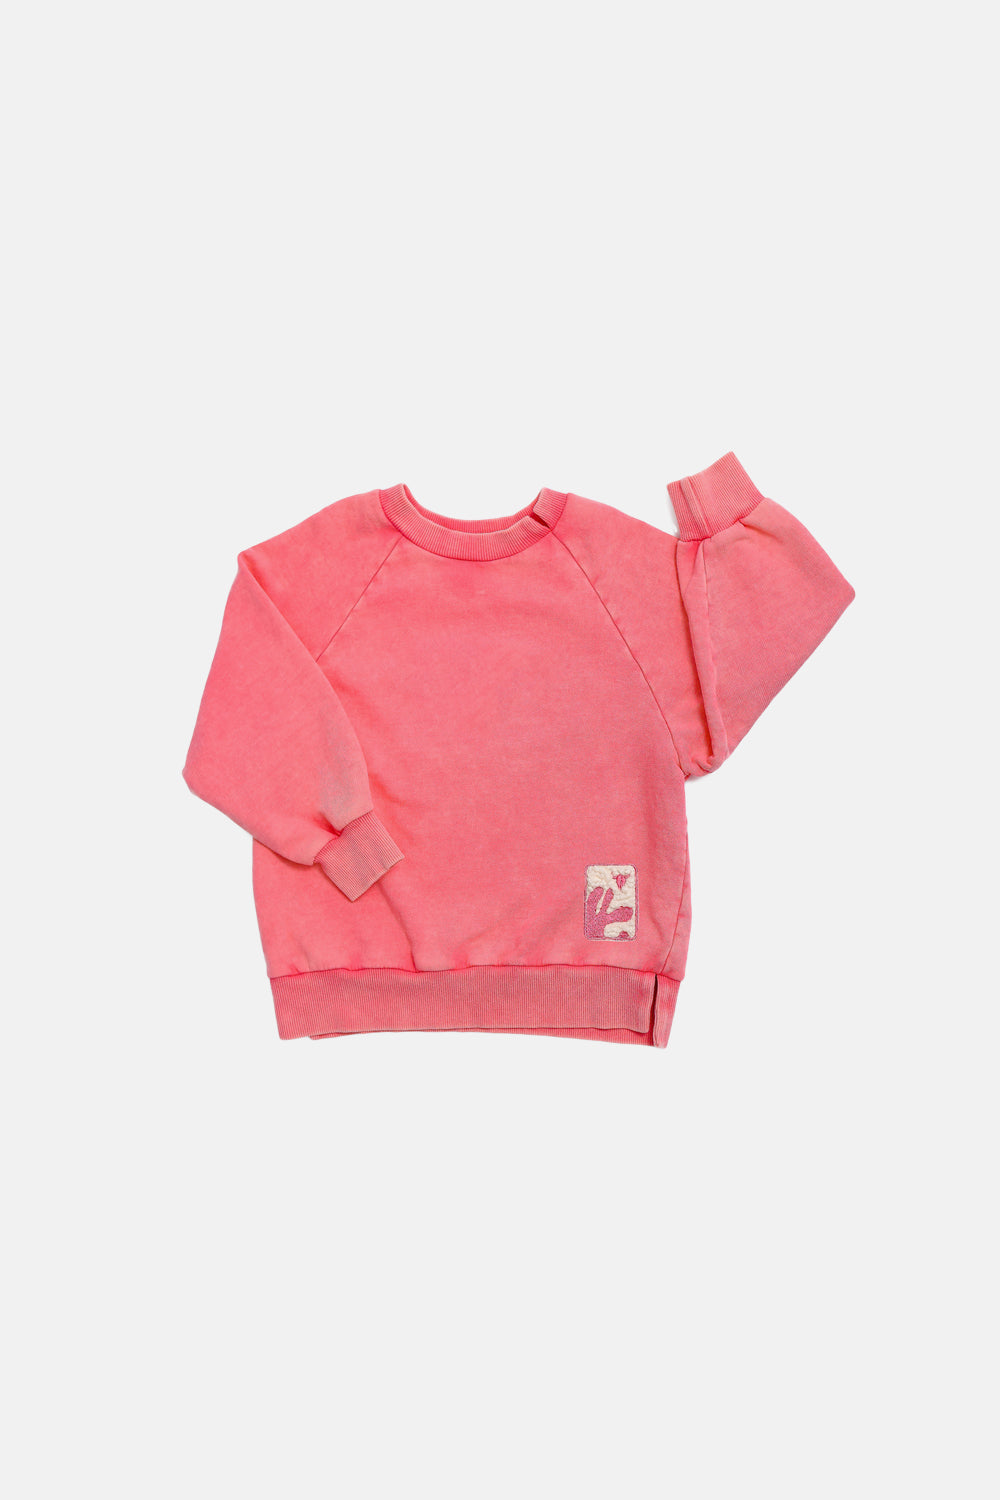 bluza dziecięca- OUR PINK SWEATSHIRT pink